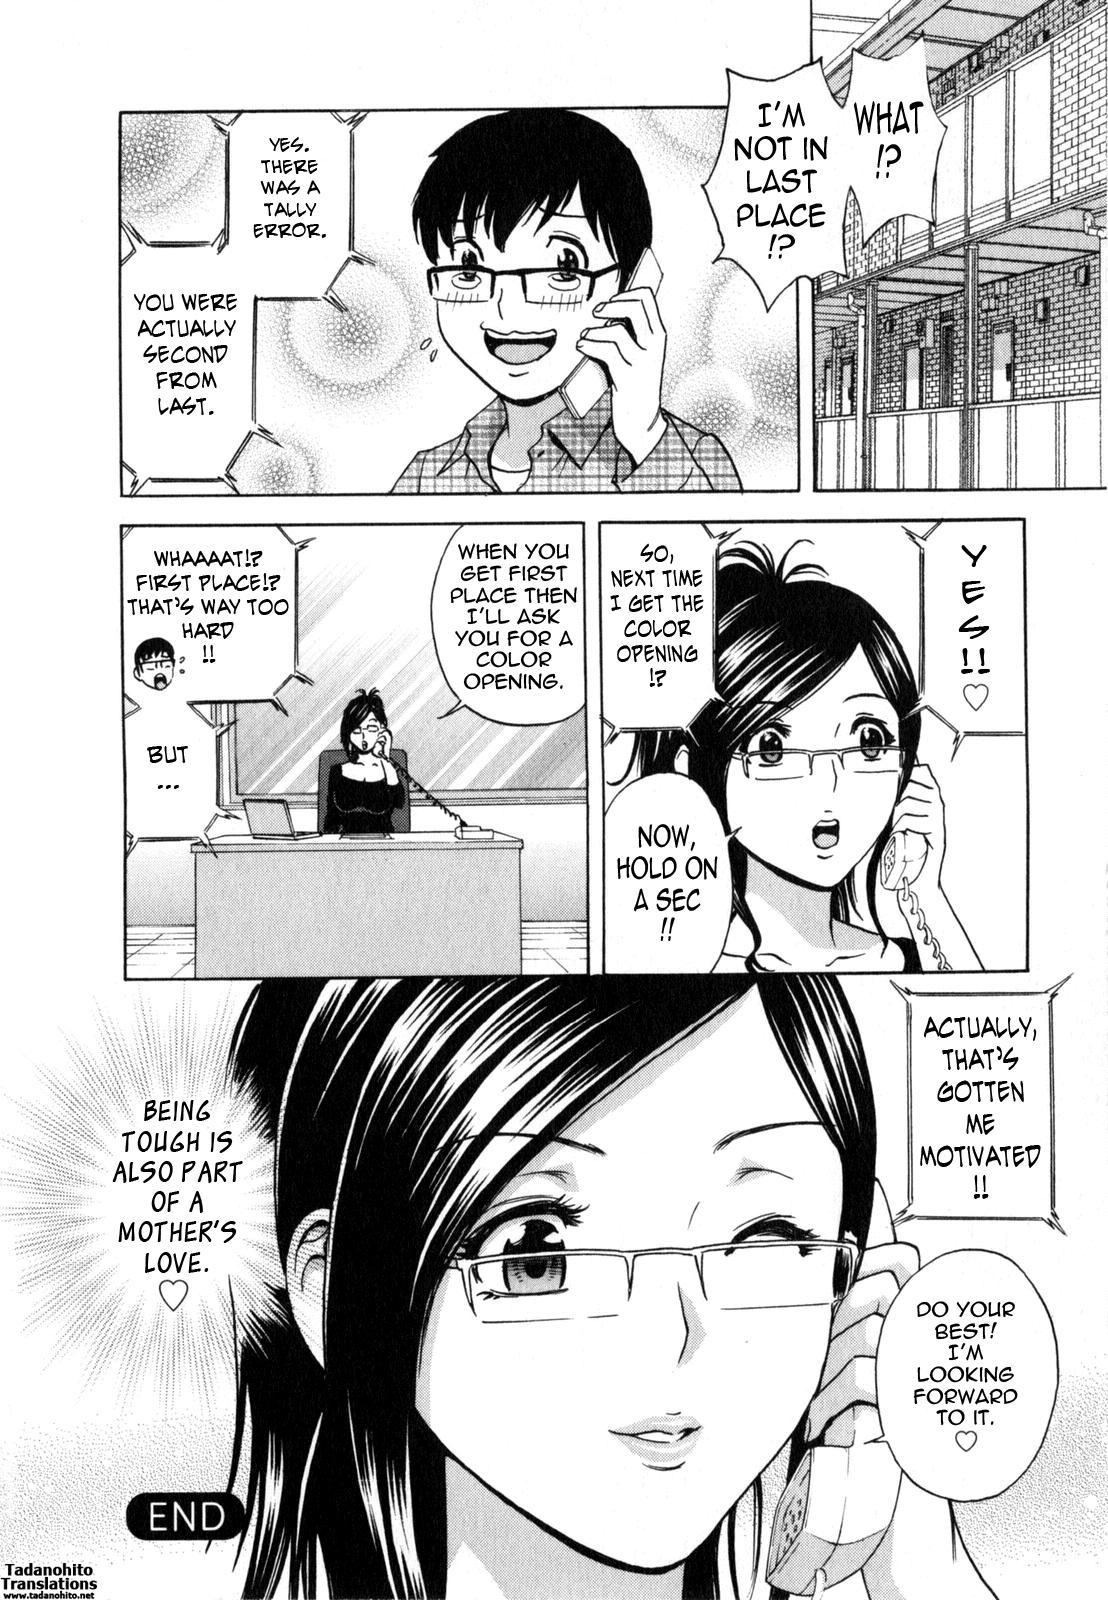 [Hidemaru] Life with Married Women Just Like a Manga 2 - Ch. 1-4 [English] {Tadanohito} 84